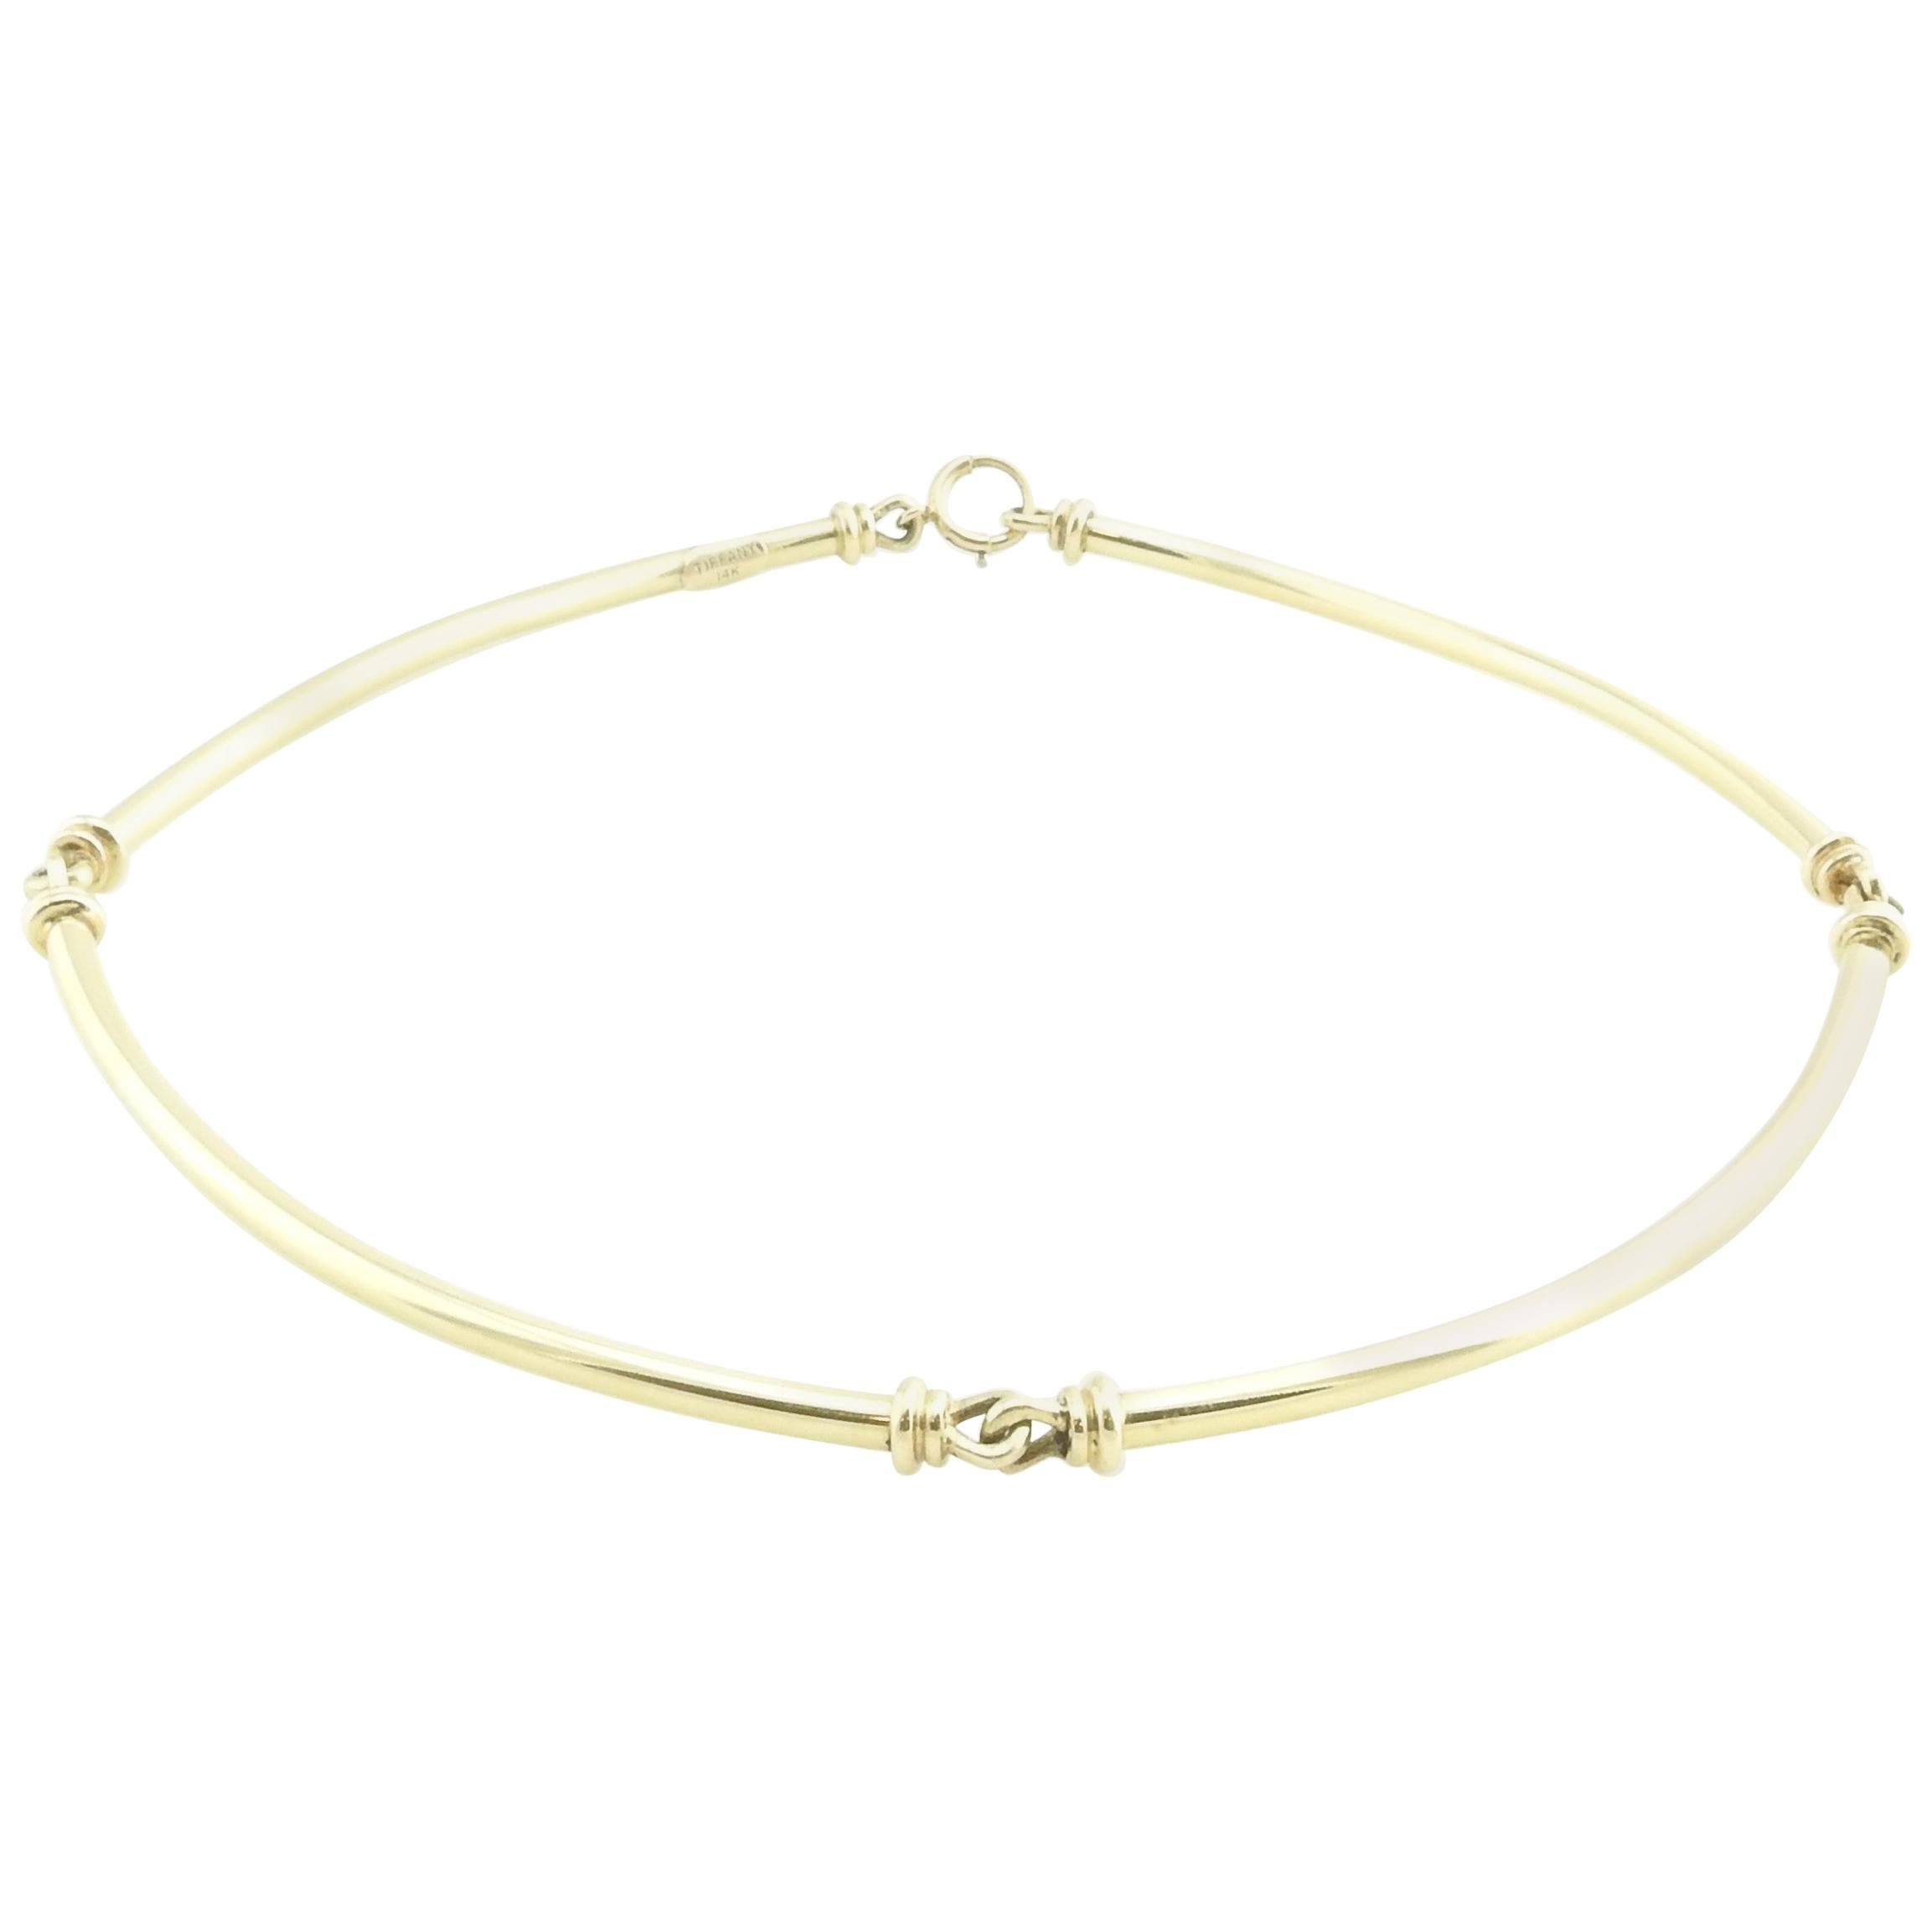 Tiffany & Co. 14 Karat Yellow Gold Bar Necklace Choker